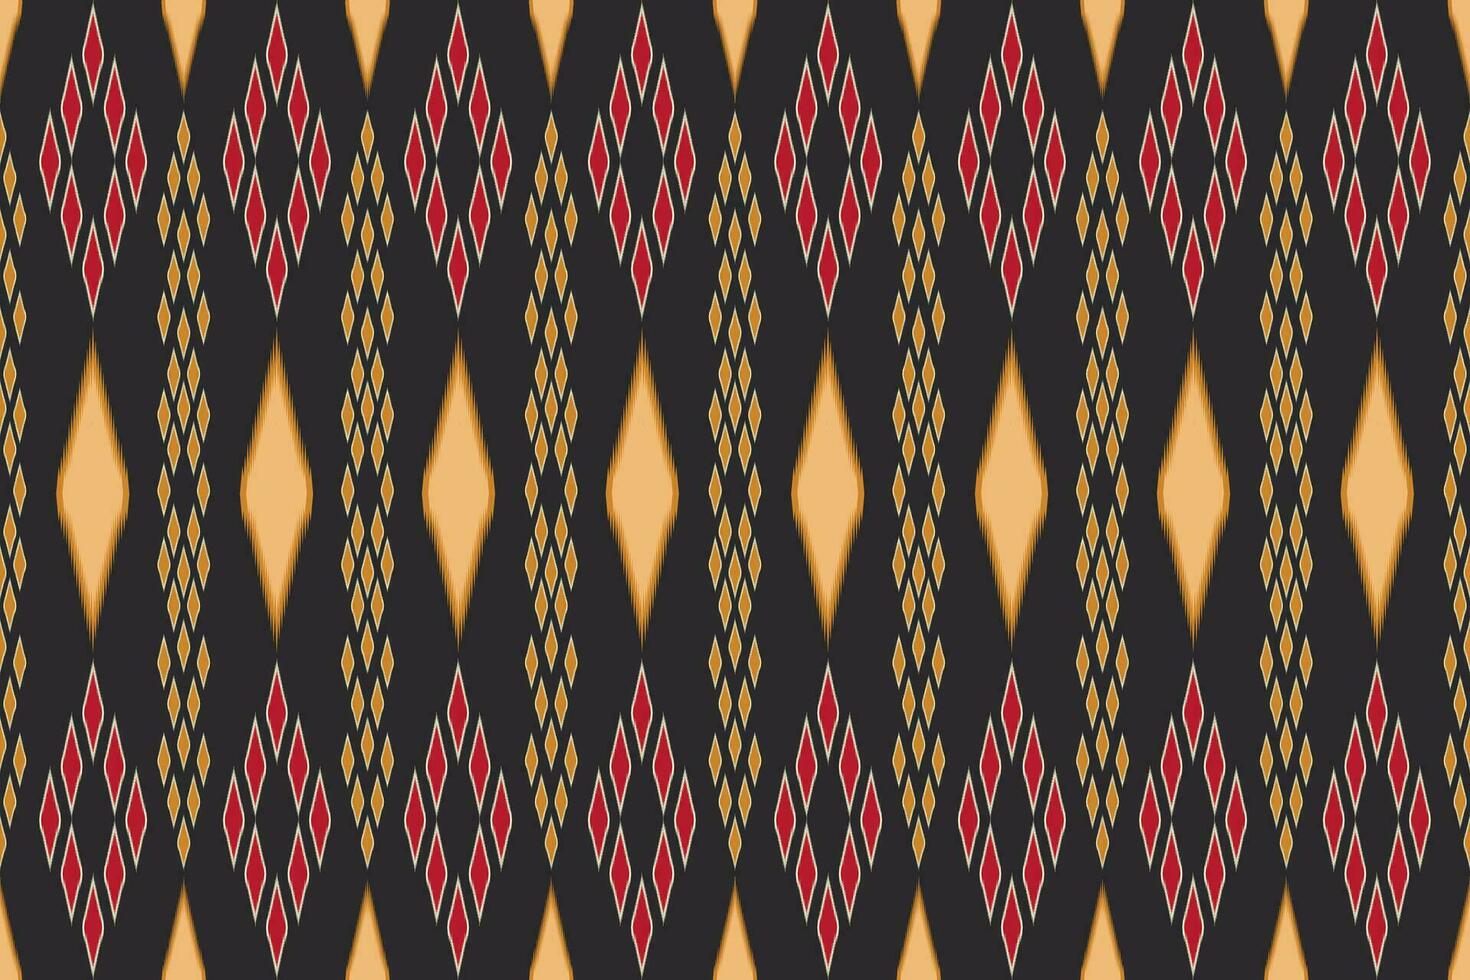 vibrerande aztec etnisk mönster geometrisk stam- boho design,tapet,omslag,mode,matta,kläder,stickat,batik,vektor,illustration vektor